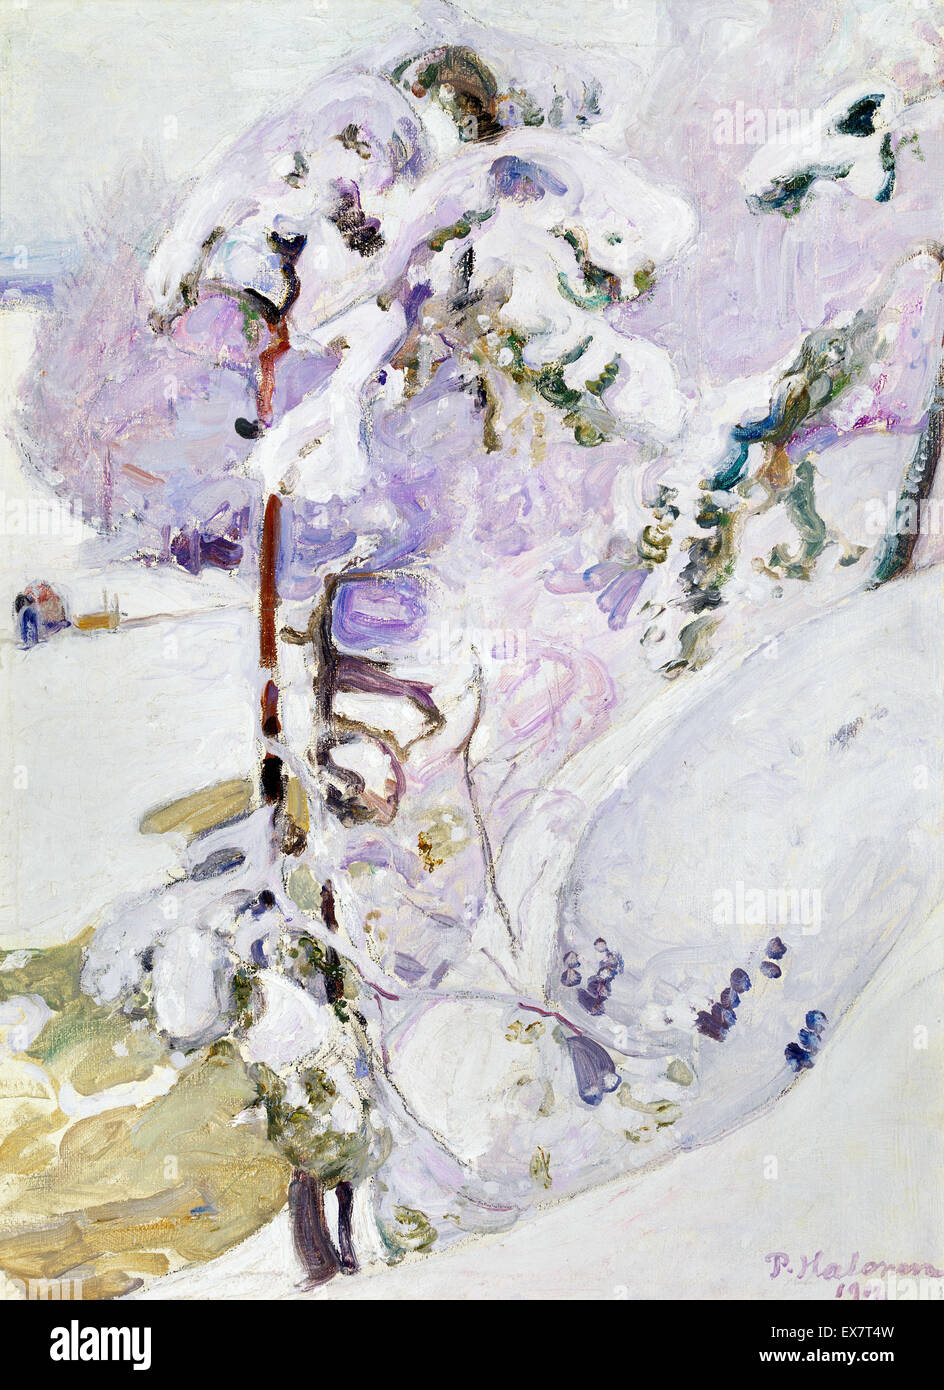 Pekka Halonen, Anfang Frühjahr 1911 Öl auf Leinwand. EMMA – Espoo Museum für moderne Kunst, Espoo, Finnland. Stockfoto